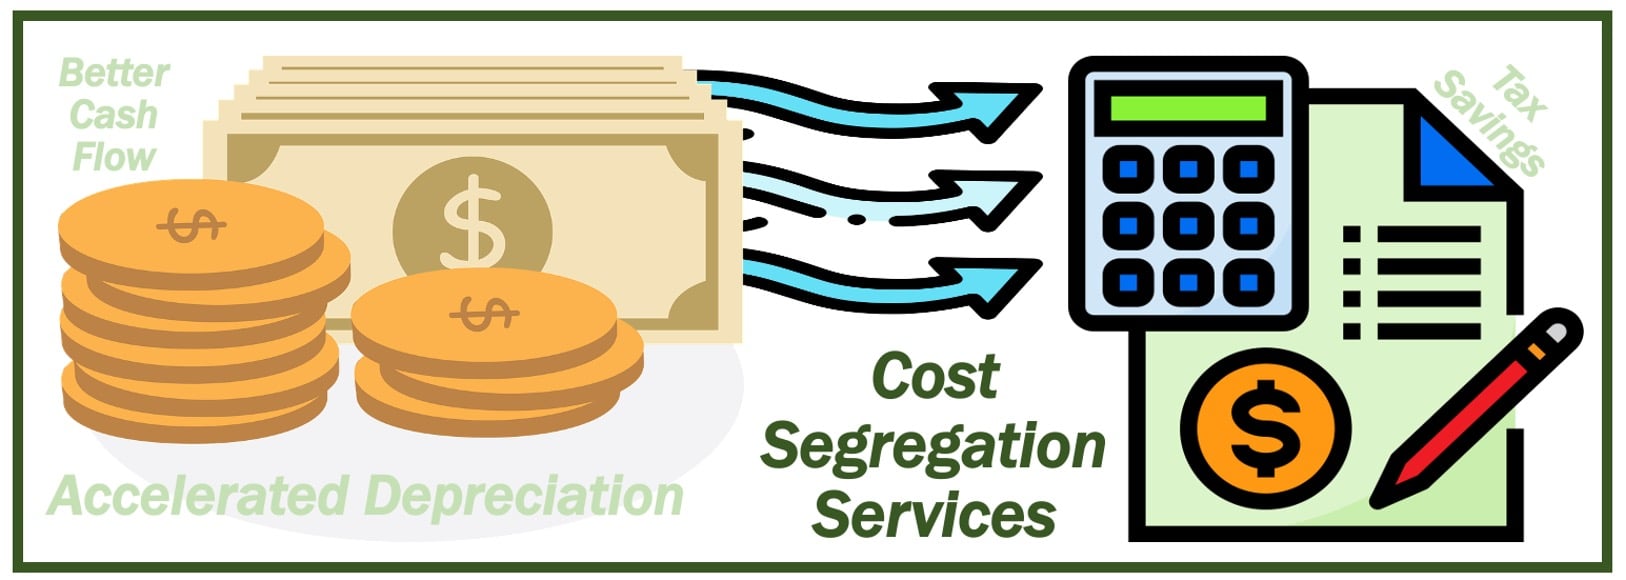 Cost segregation services